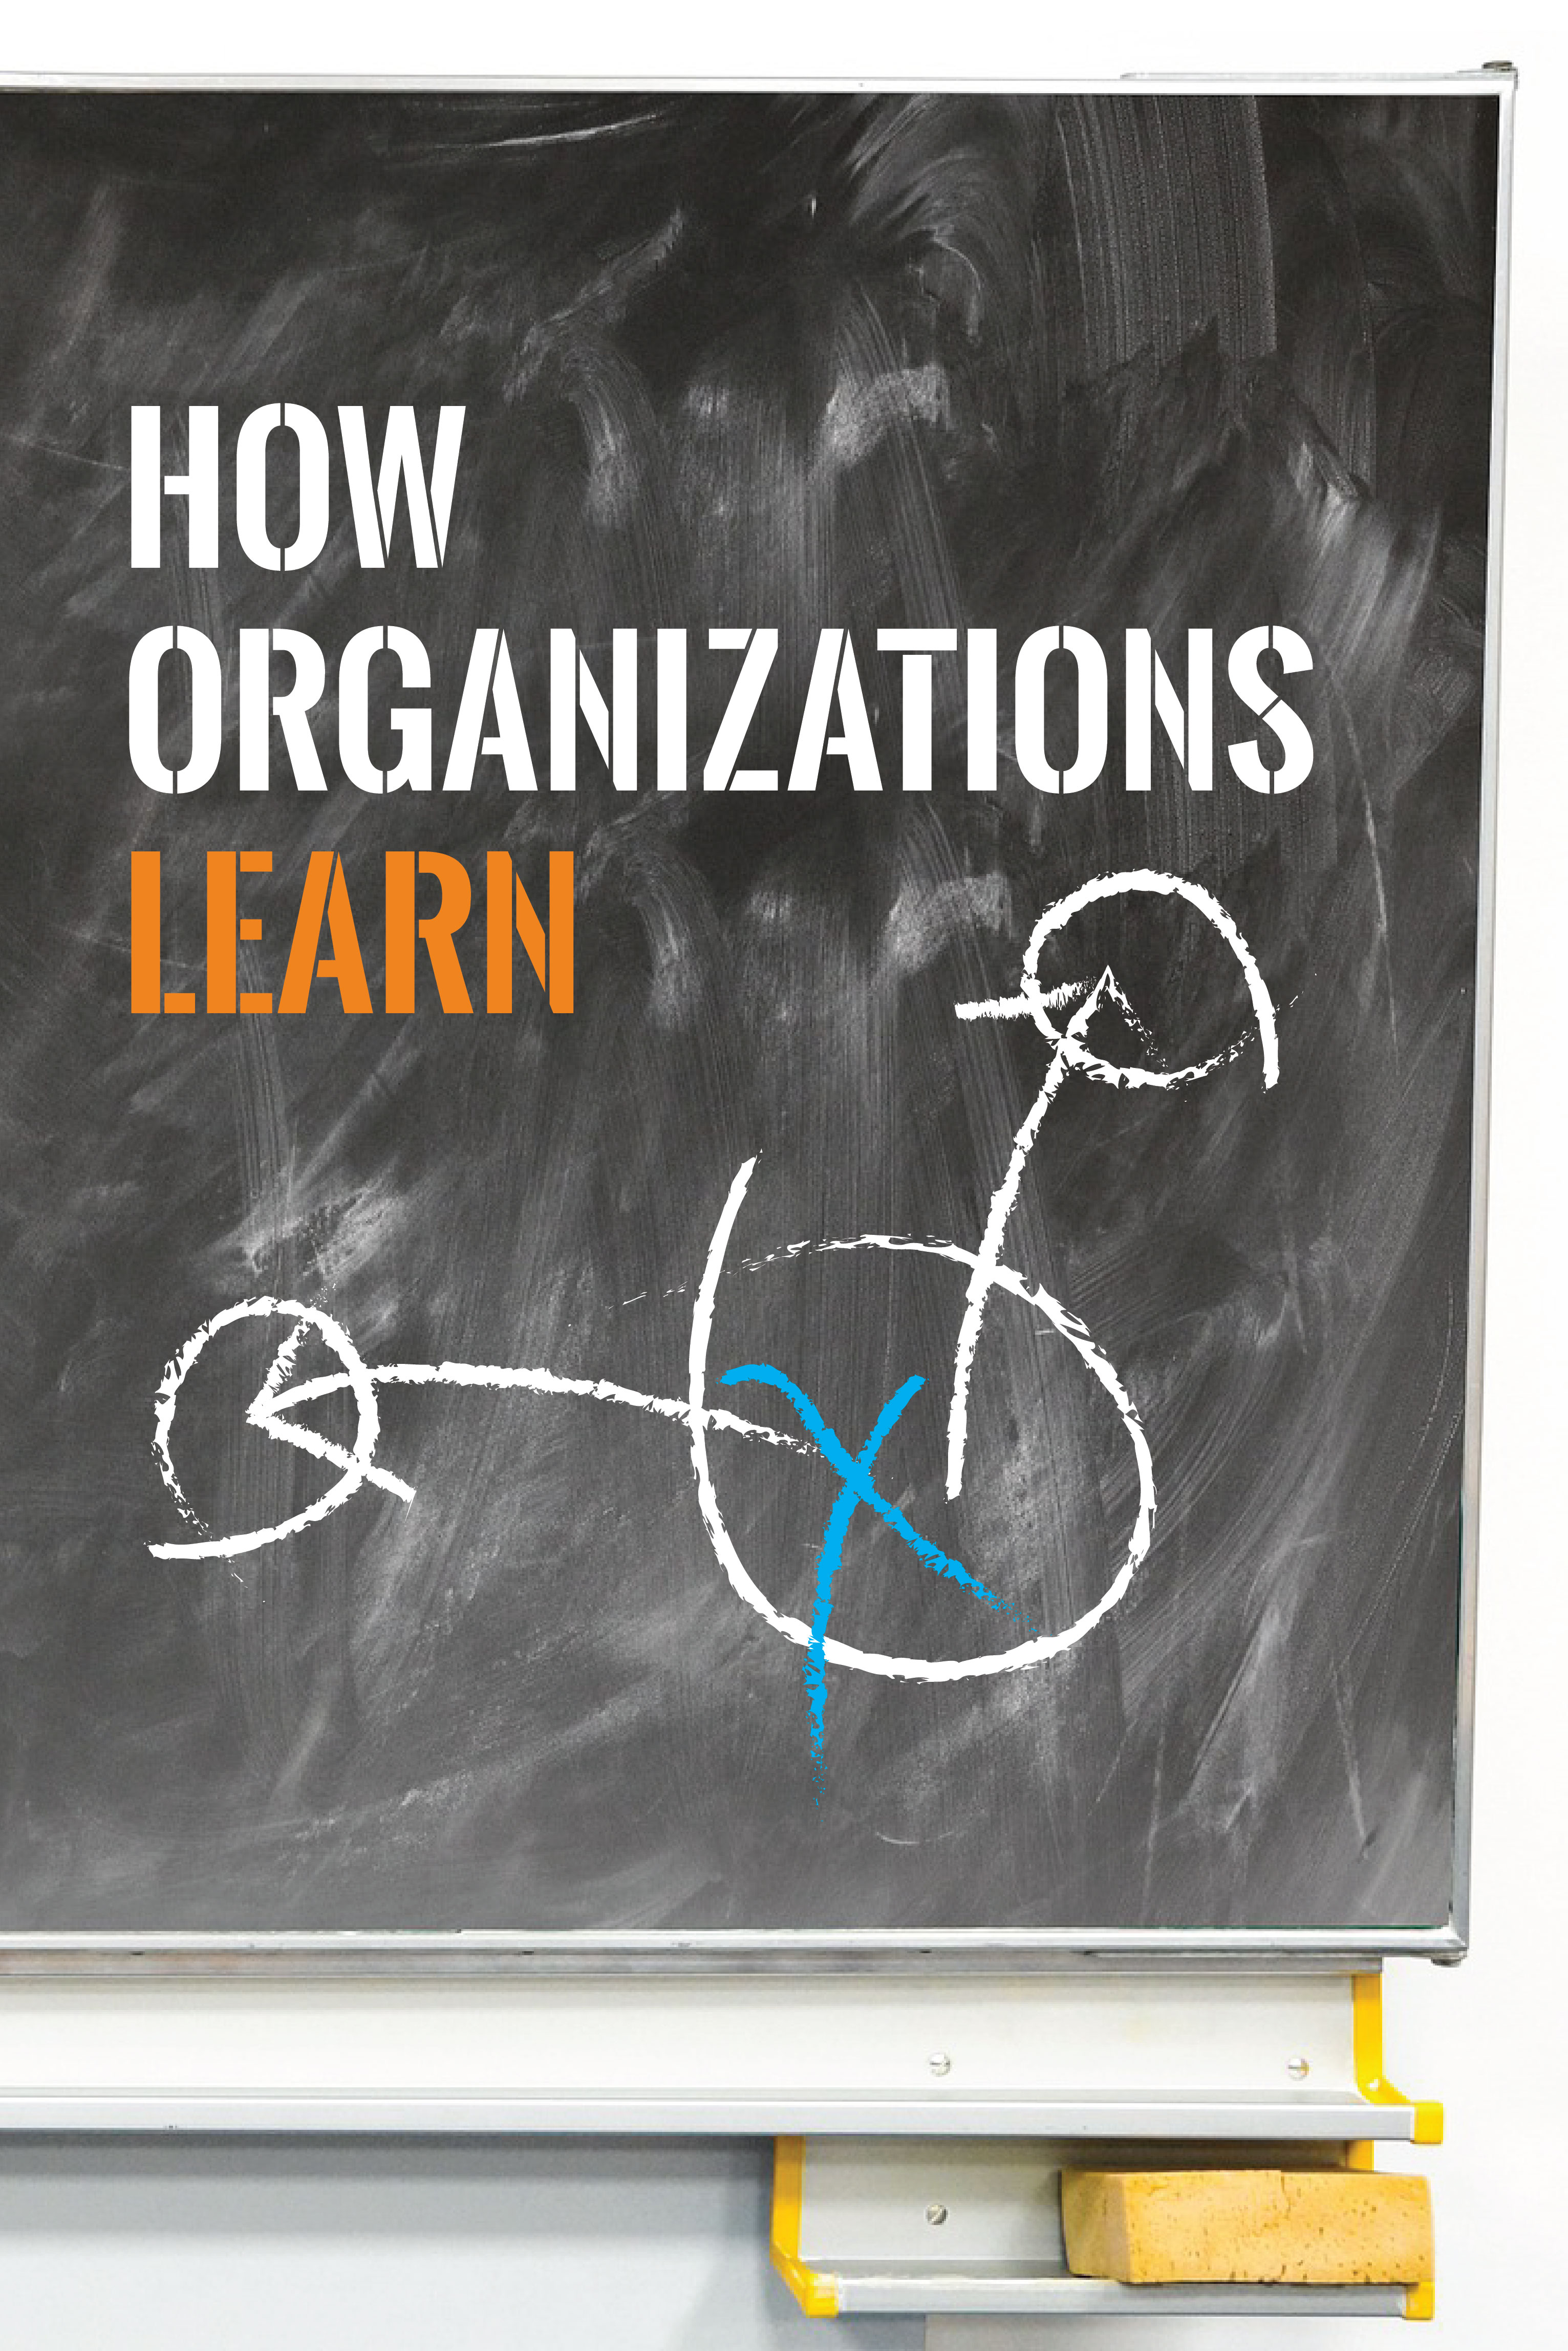 how organizations learn-pinterest[3]